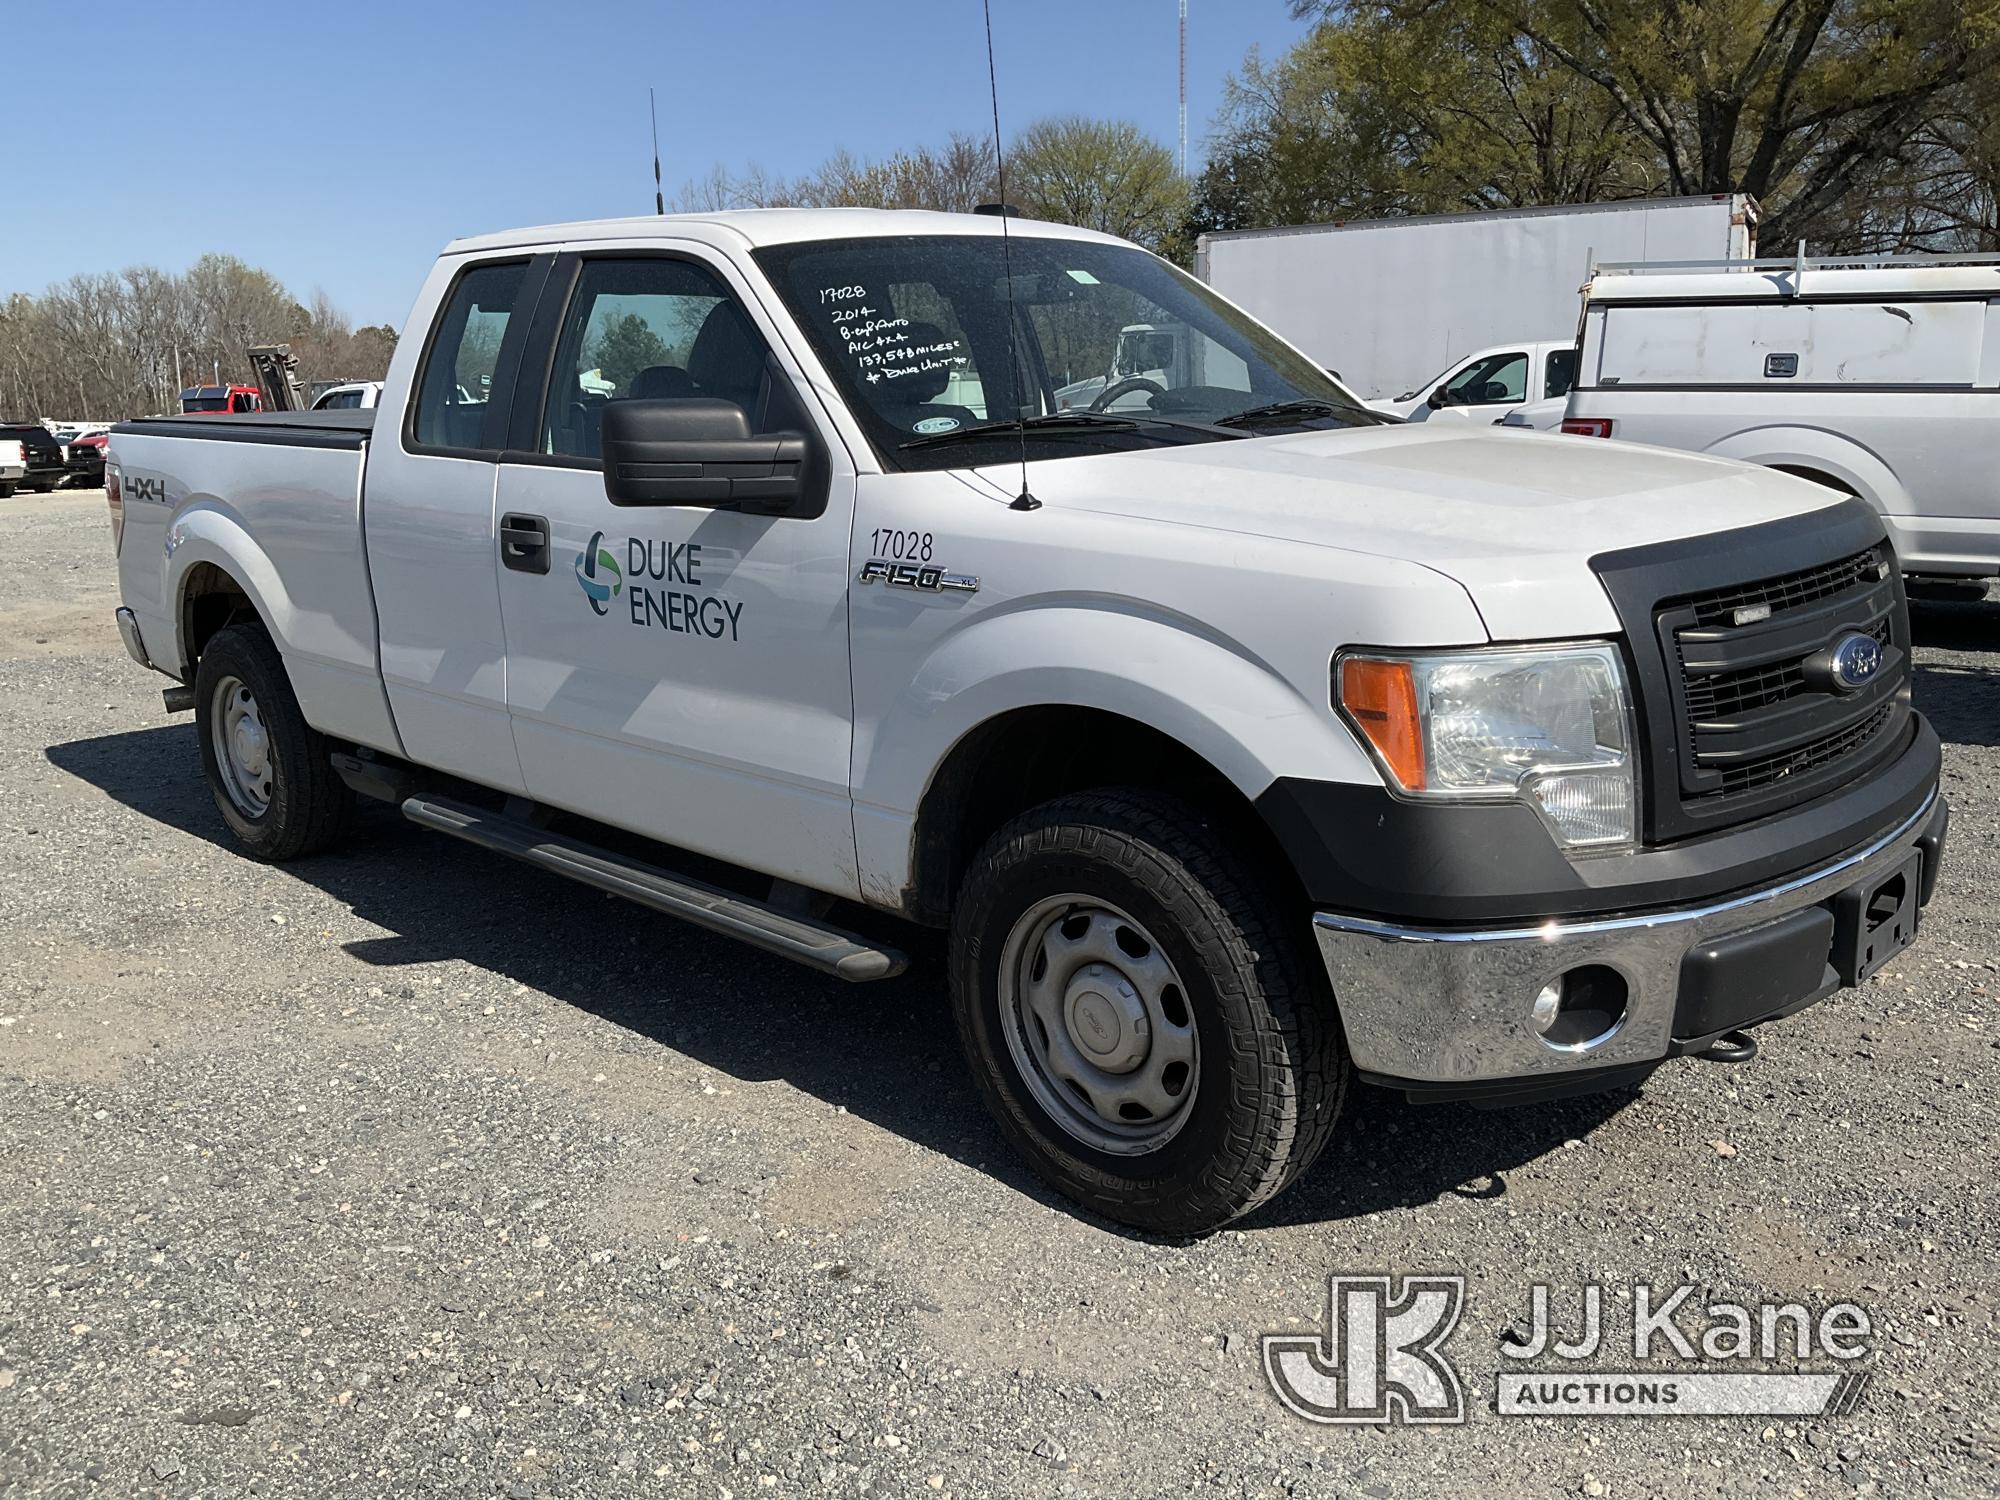 (Charlotte, NC) 2014 Ford F150 4x4 Extended-Cab Pickup Truck Duke Unit) (Runs & Moves